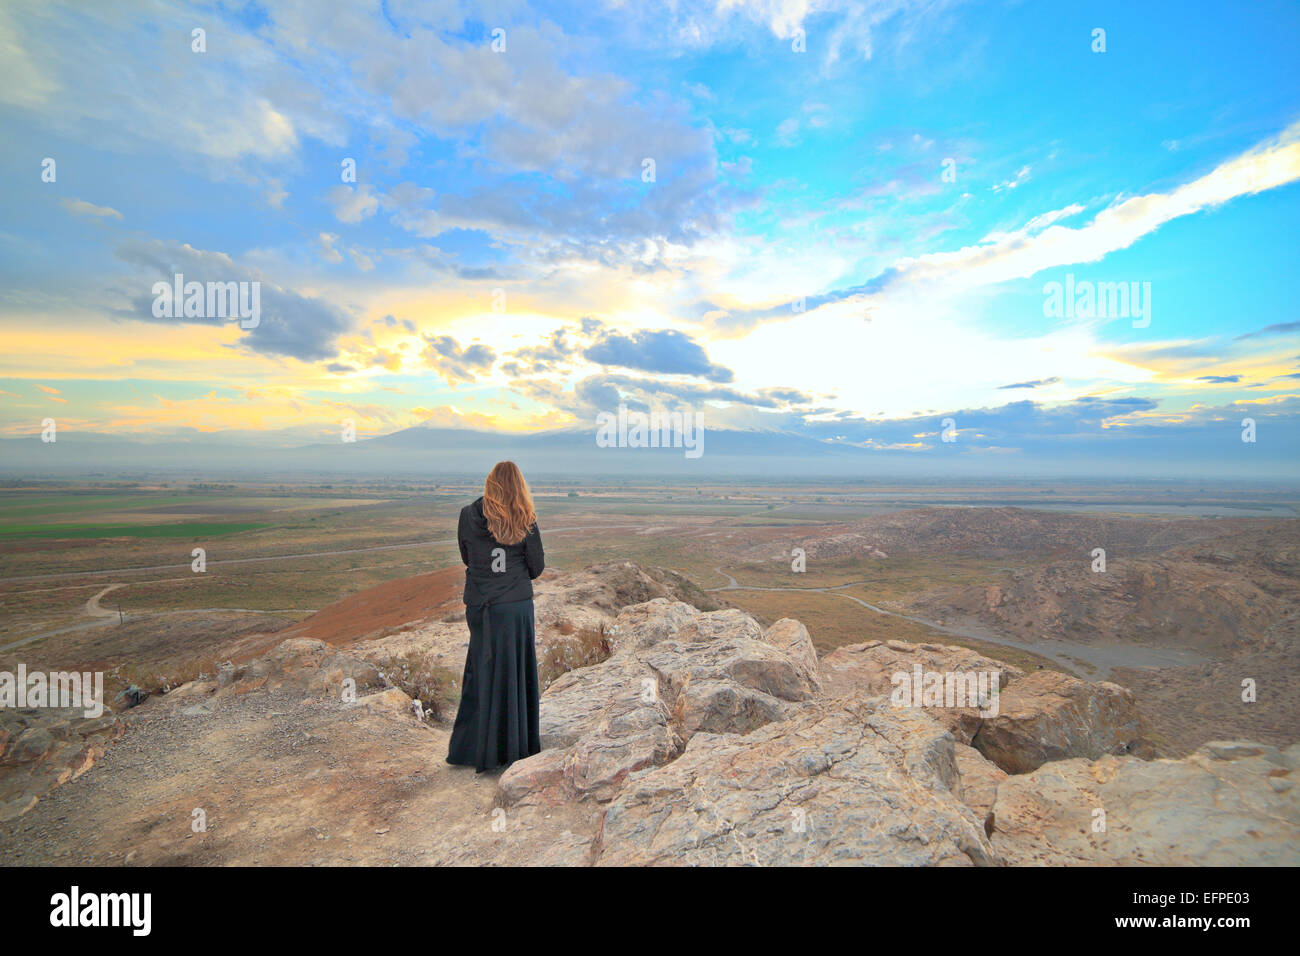 View of Ararat valley, Khor Virap, Ararat Province, Armenia Stock Photo